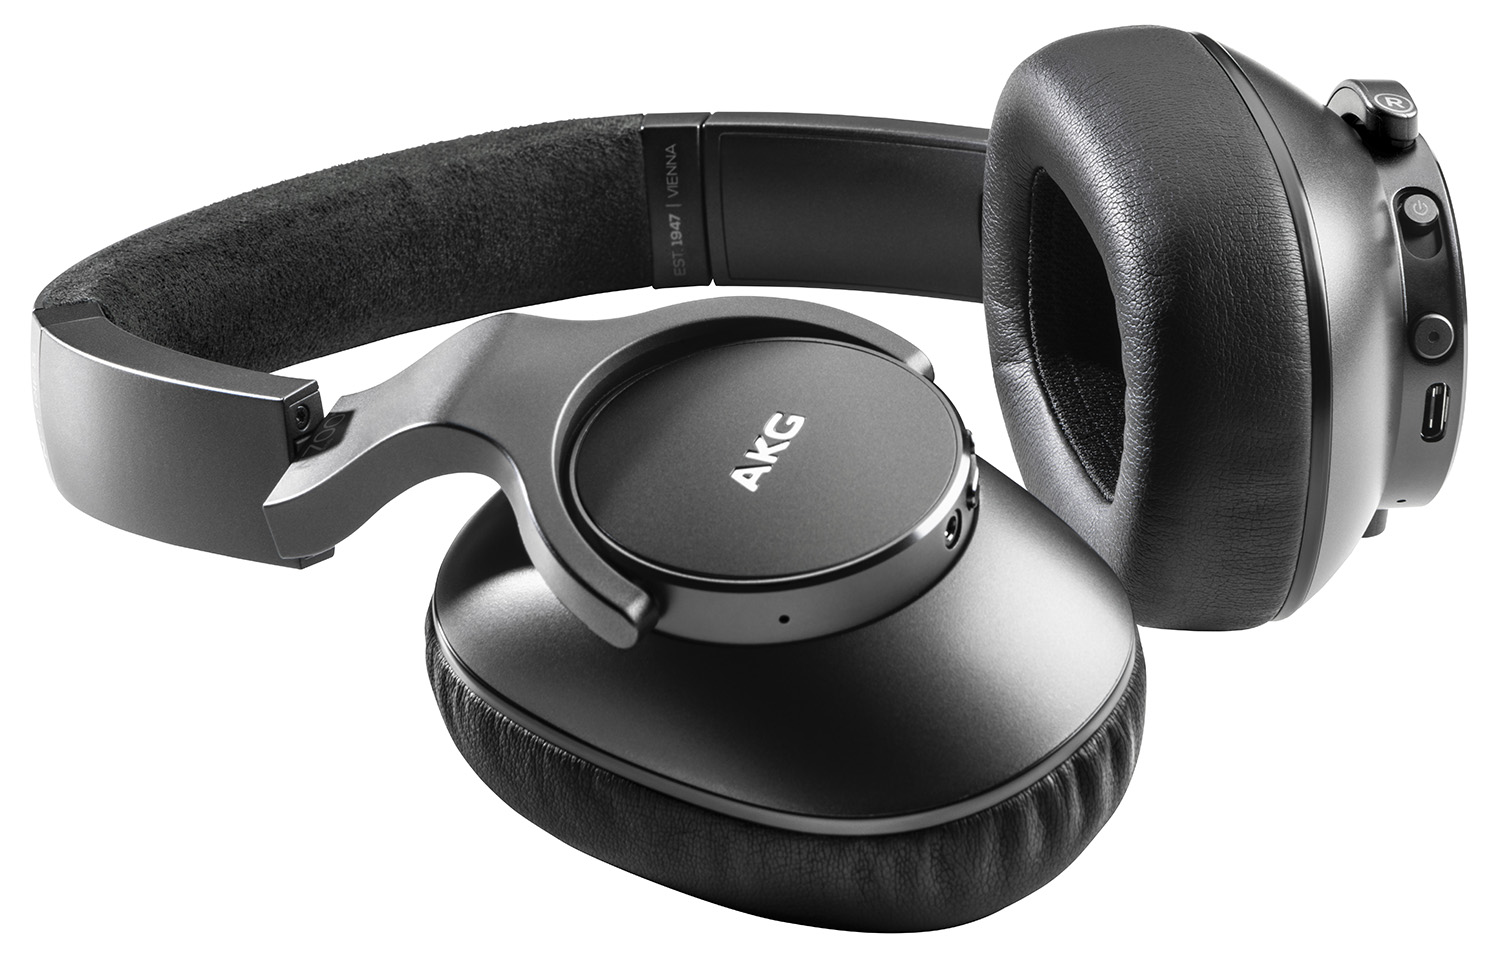 AKG’s N700 NCM2 Bluetooth headphones launch soon